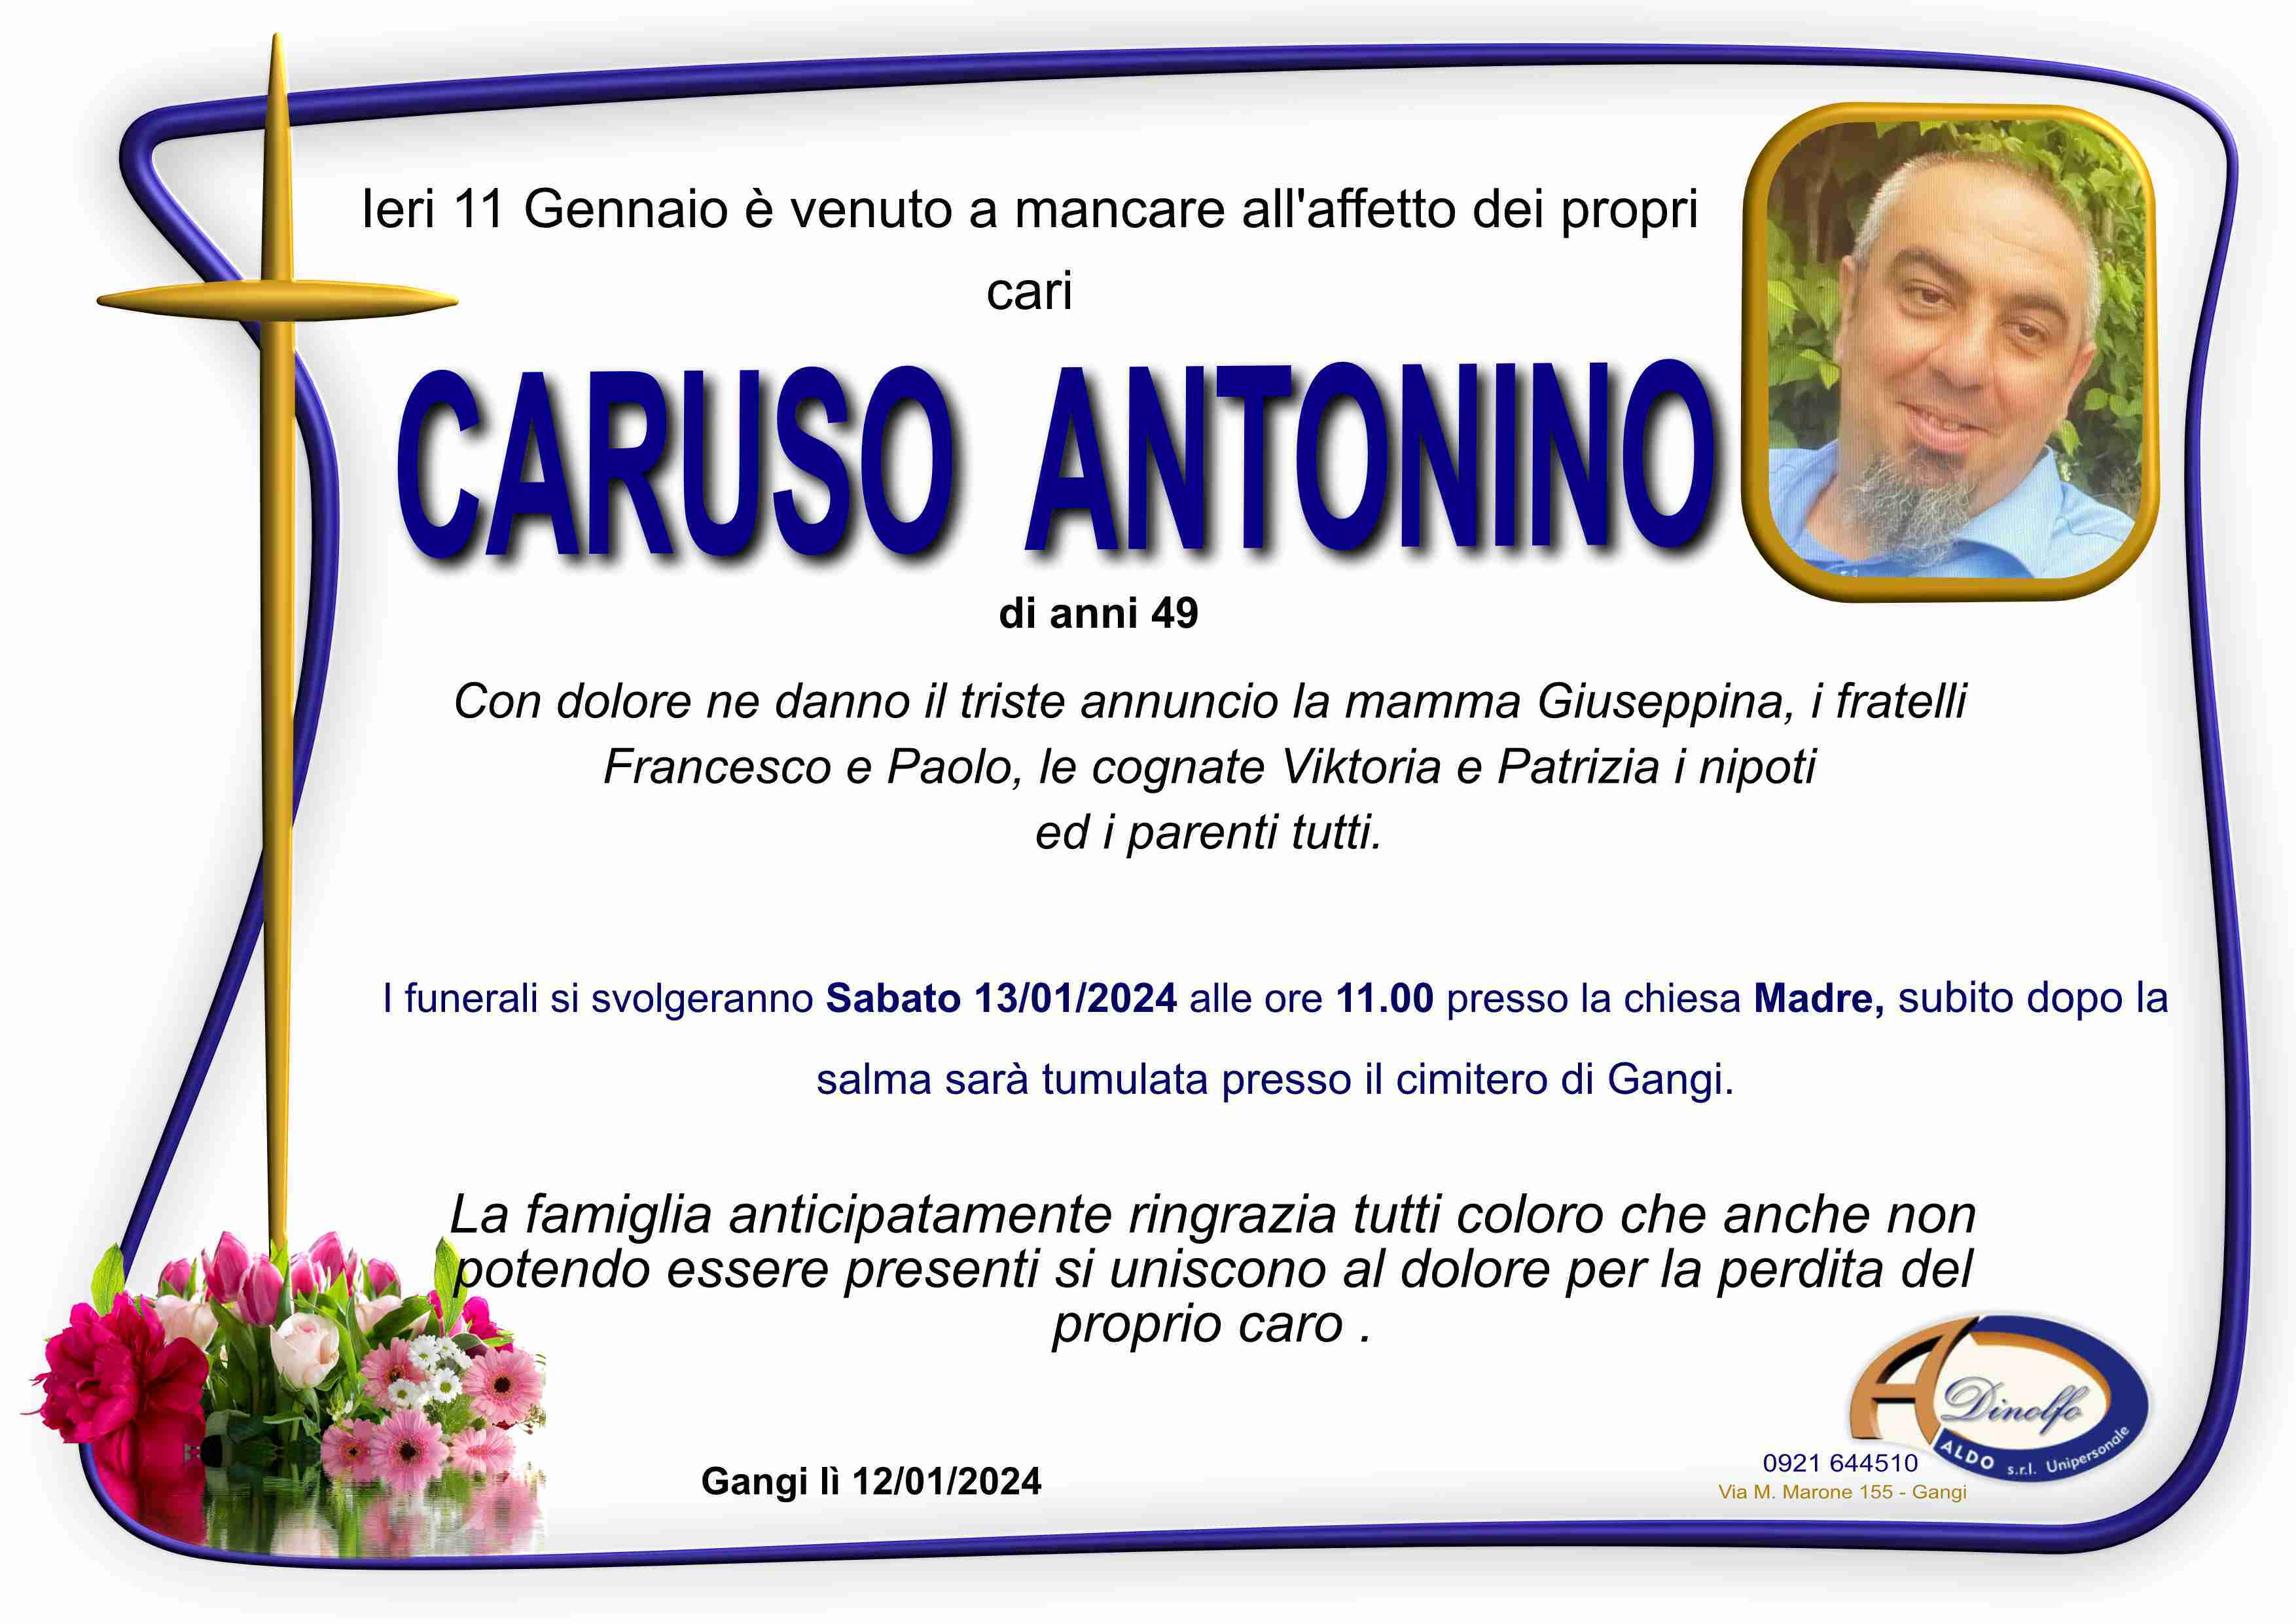 Antonino Caruso